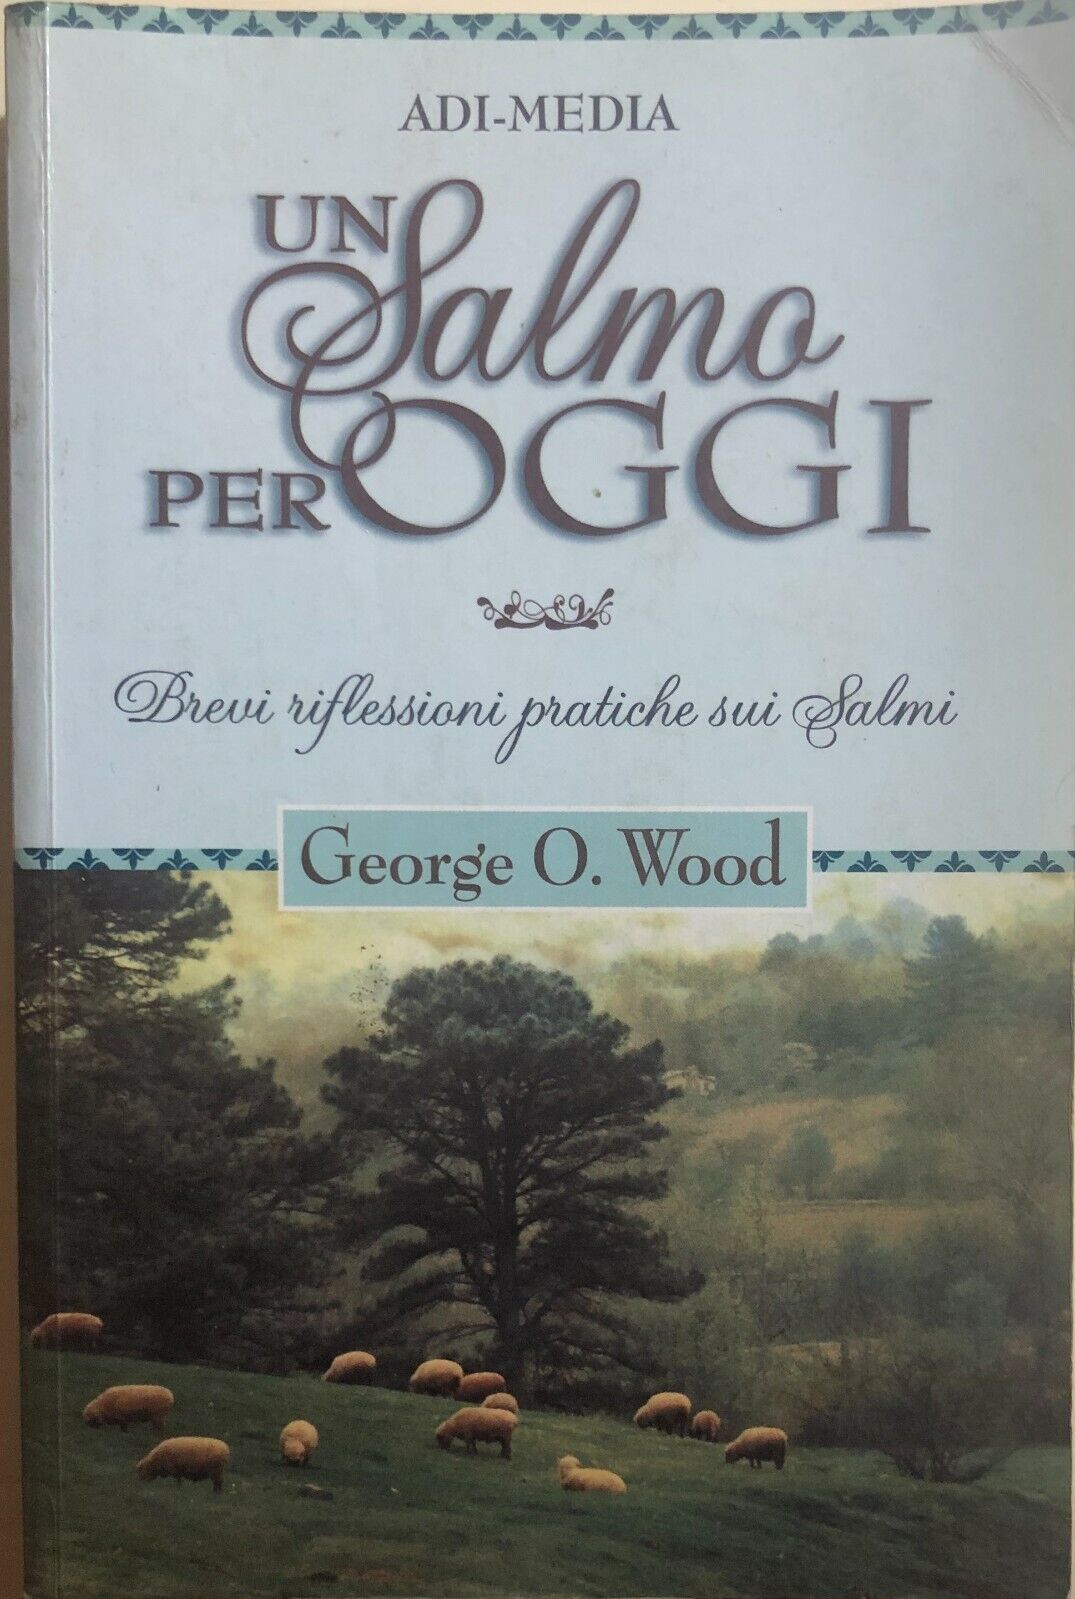 Un Salmo per oggi di George O. Wood, 2005, Adi-media